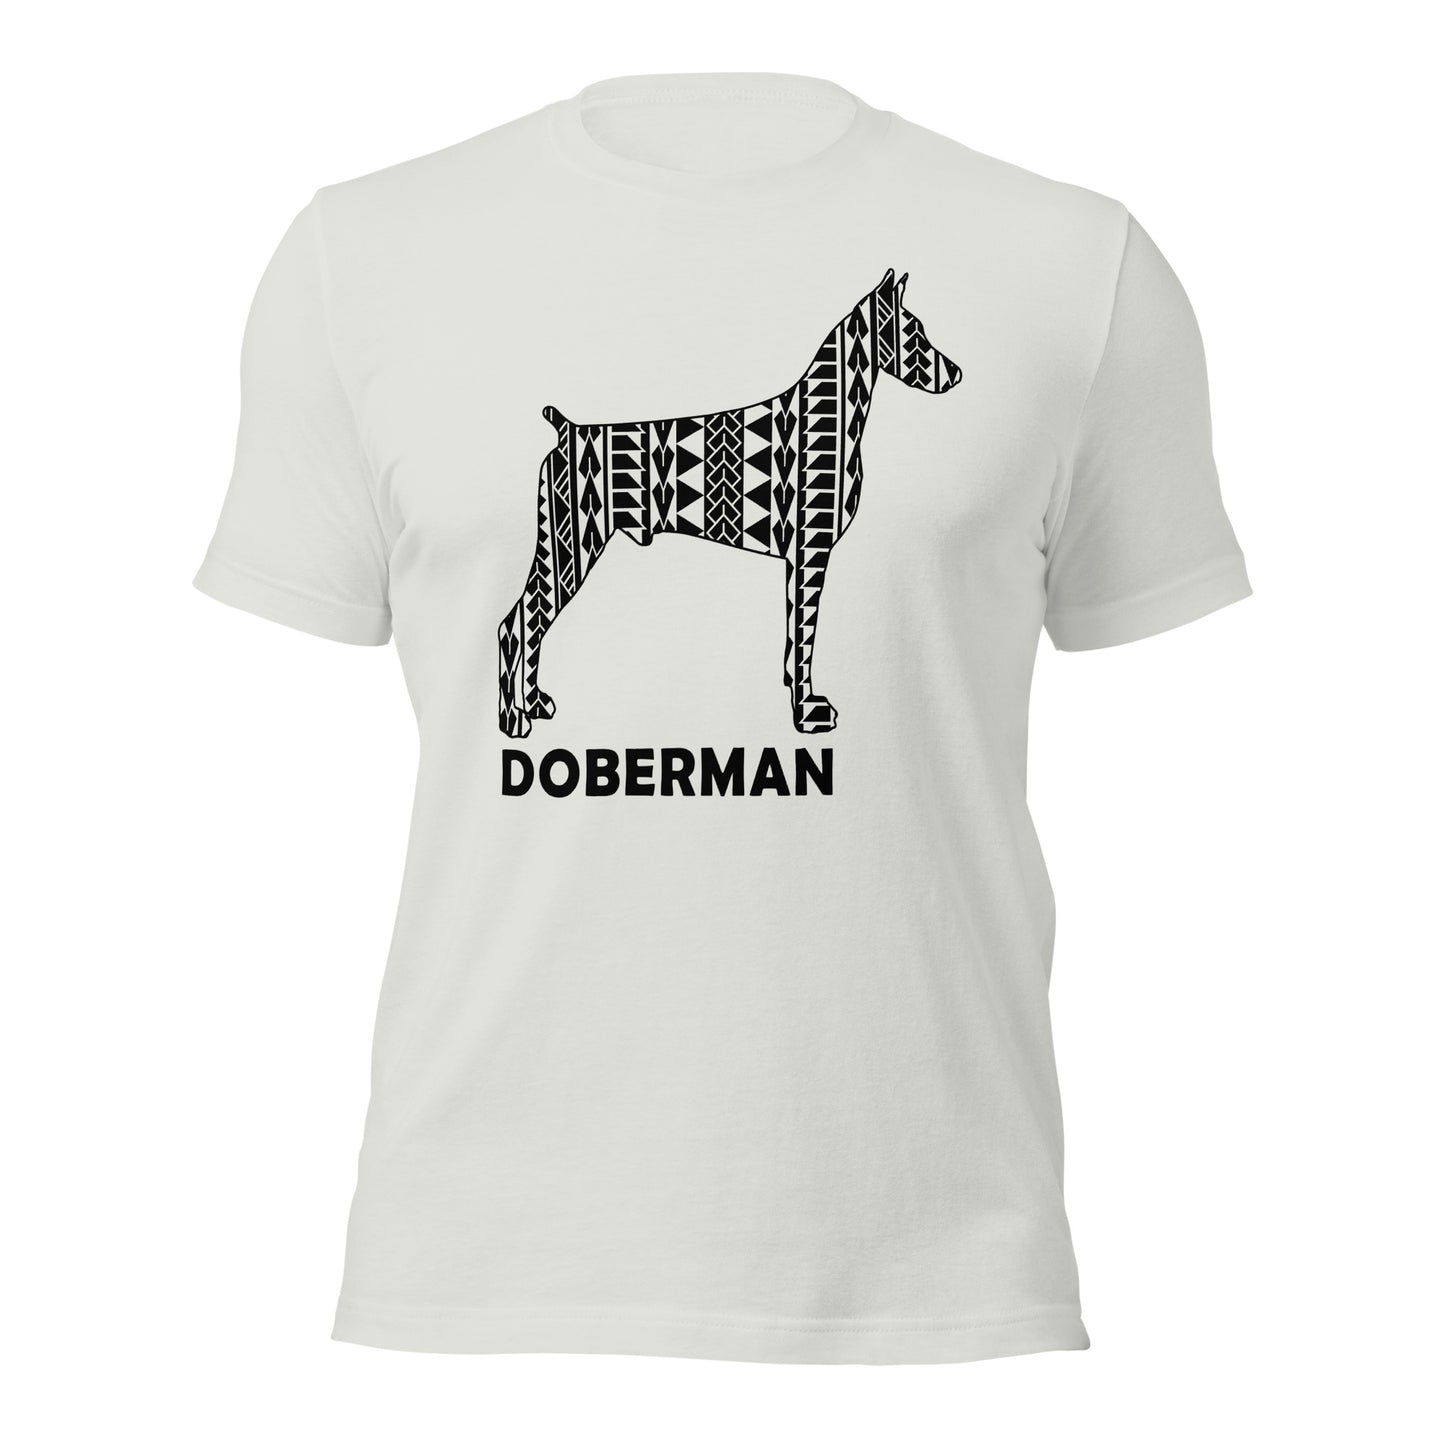 Doberman Polynesian t-shirt silver by Dog Artistry.